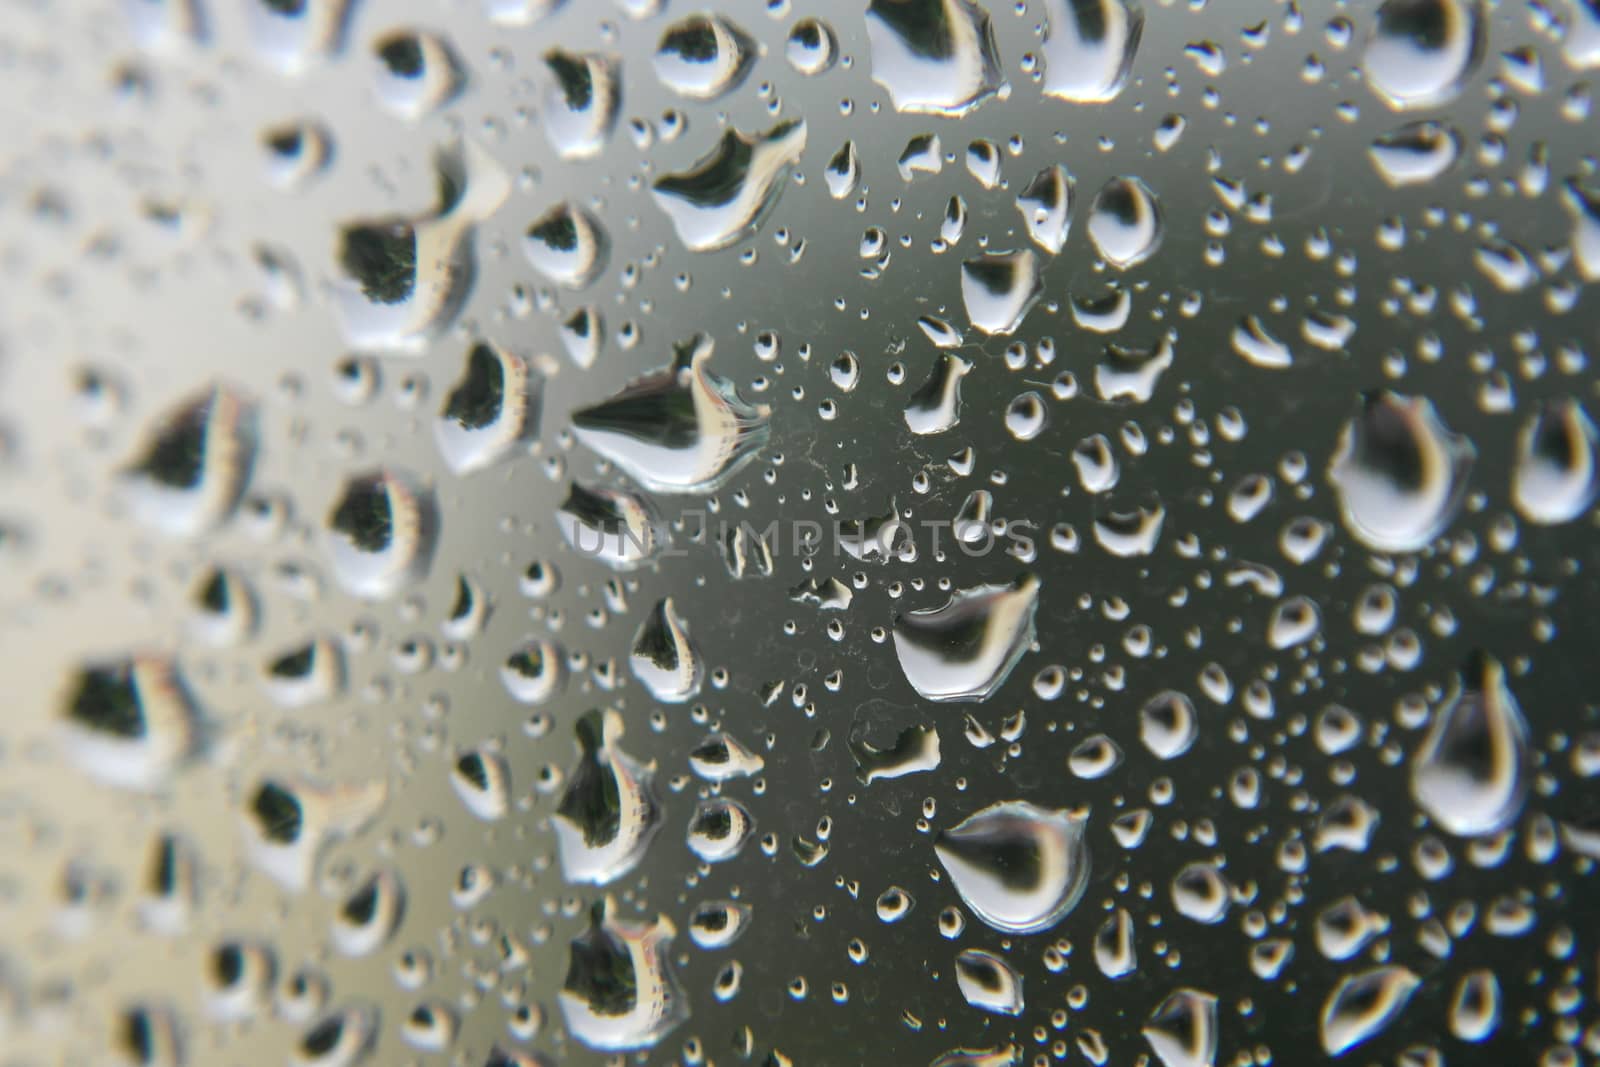 Drops of rain on the window by sergpet